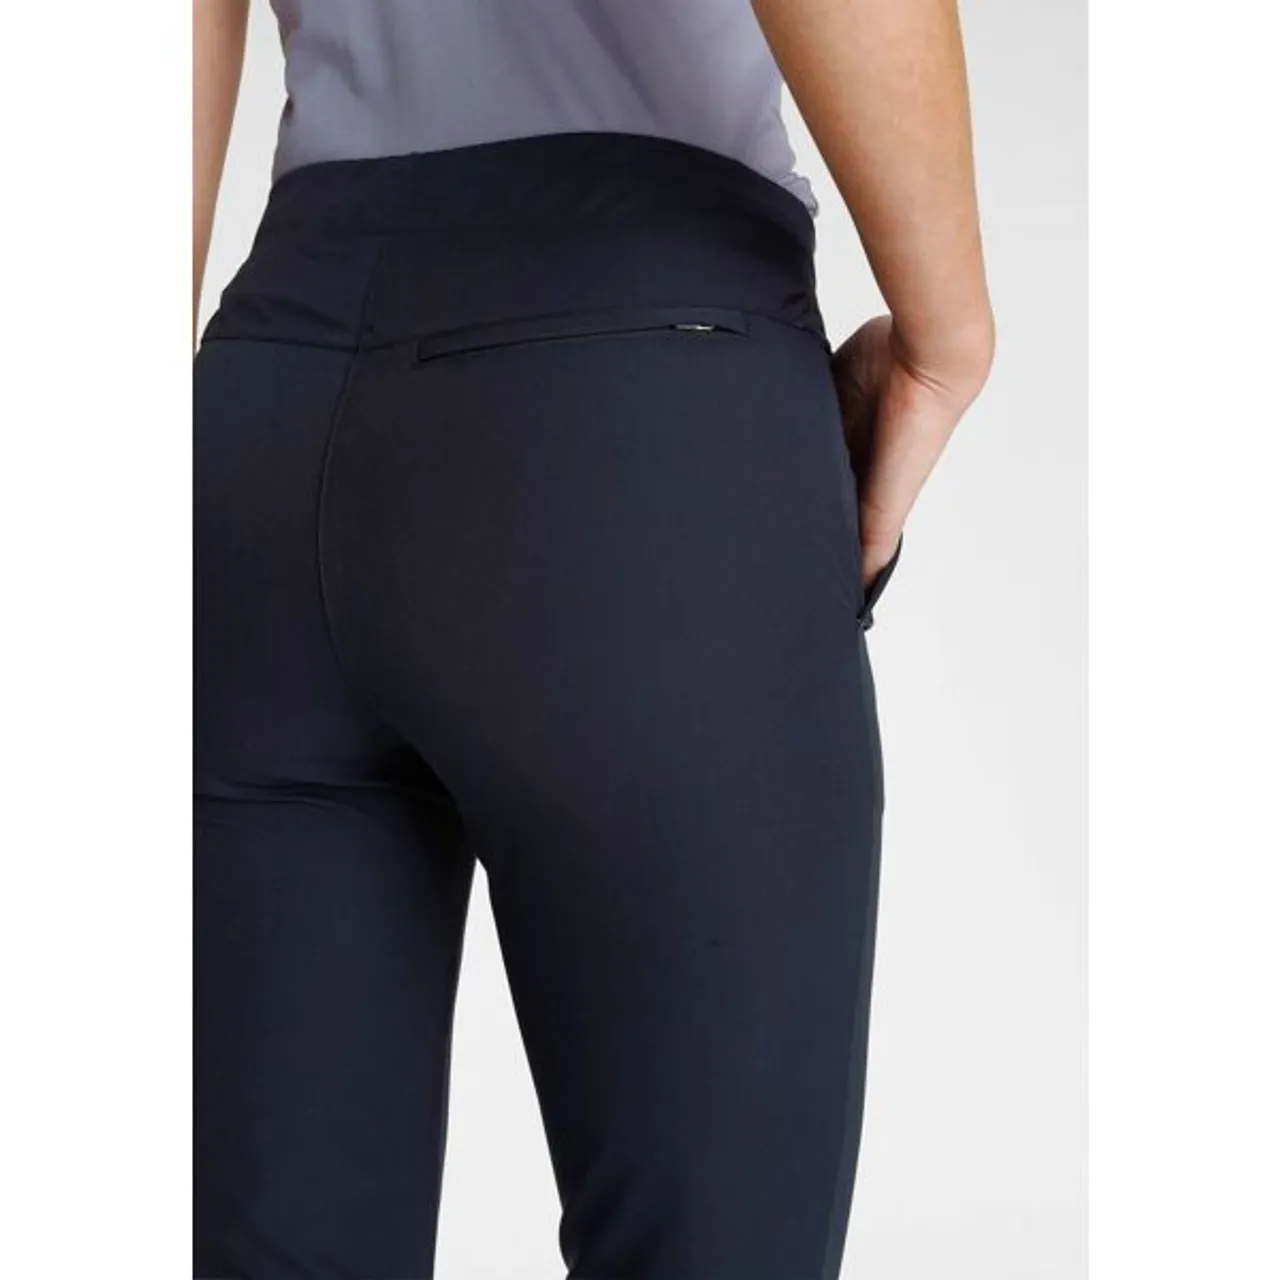 Outdoorhose POLARINO "Joggpants" Gr. 44, N-Gr, blau (marine) Damen Hosen Sporthosen